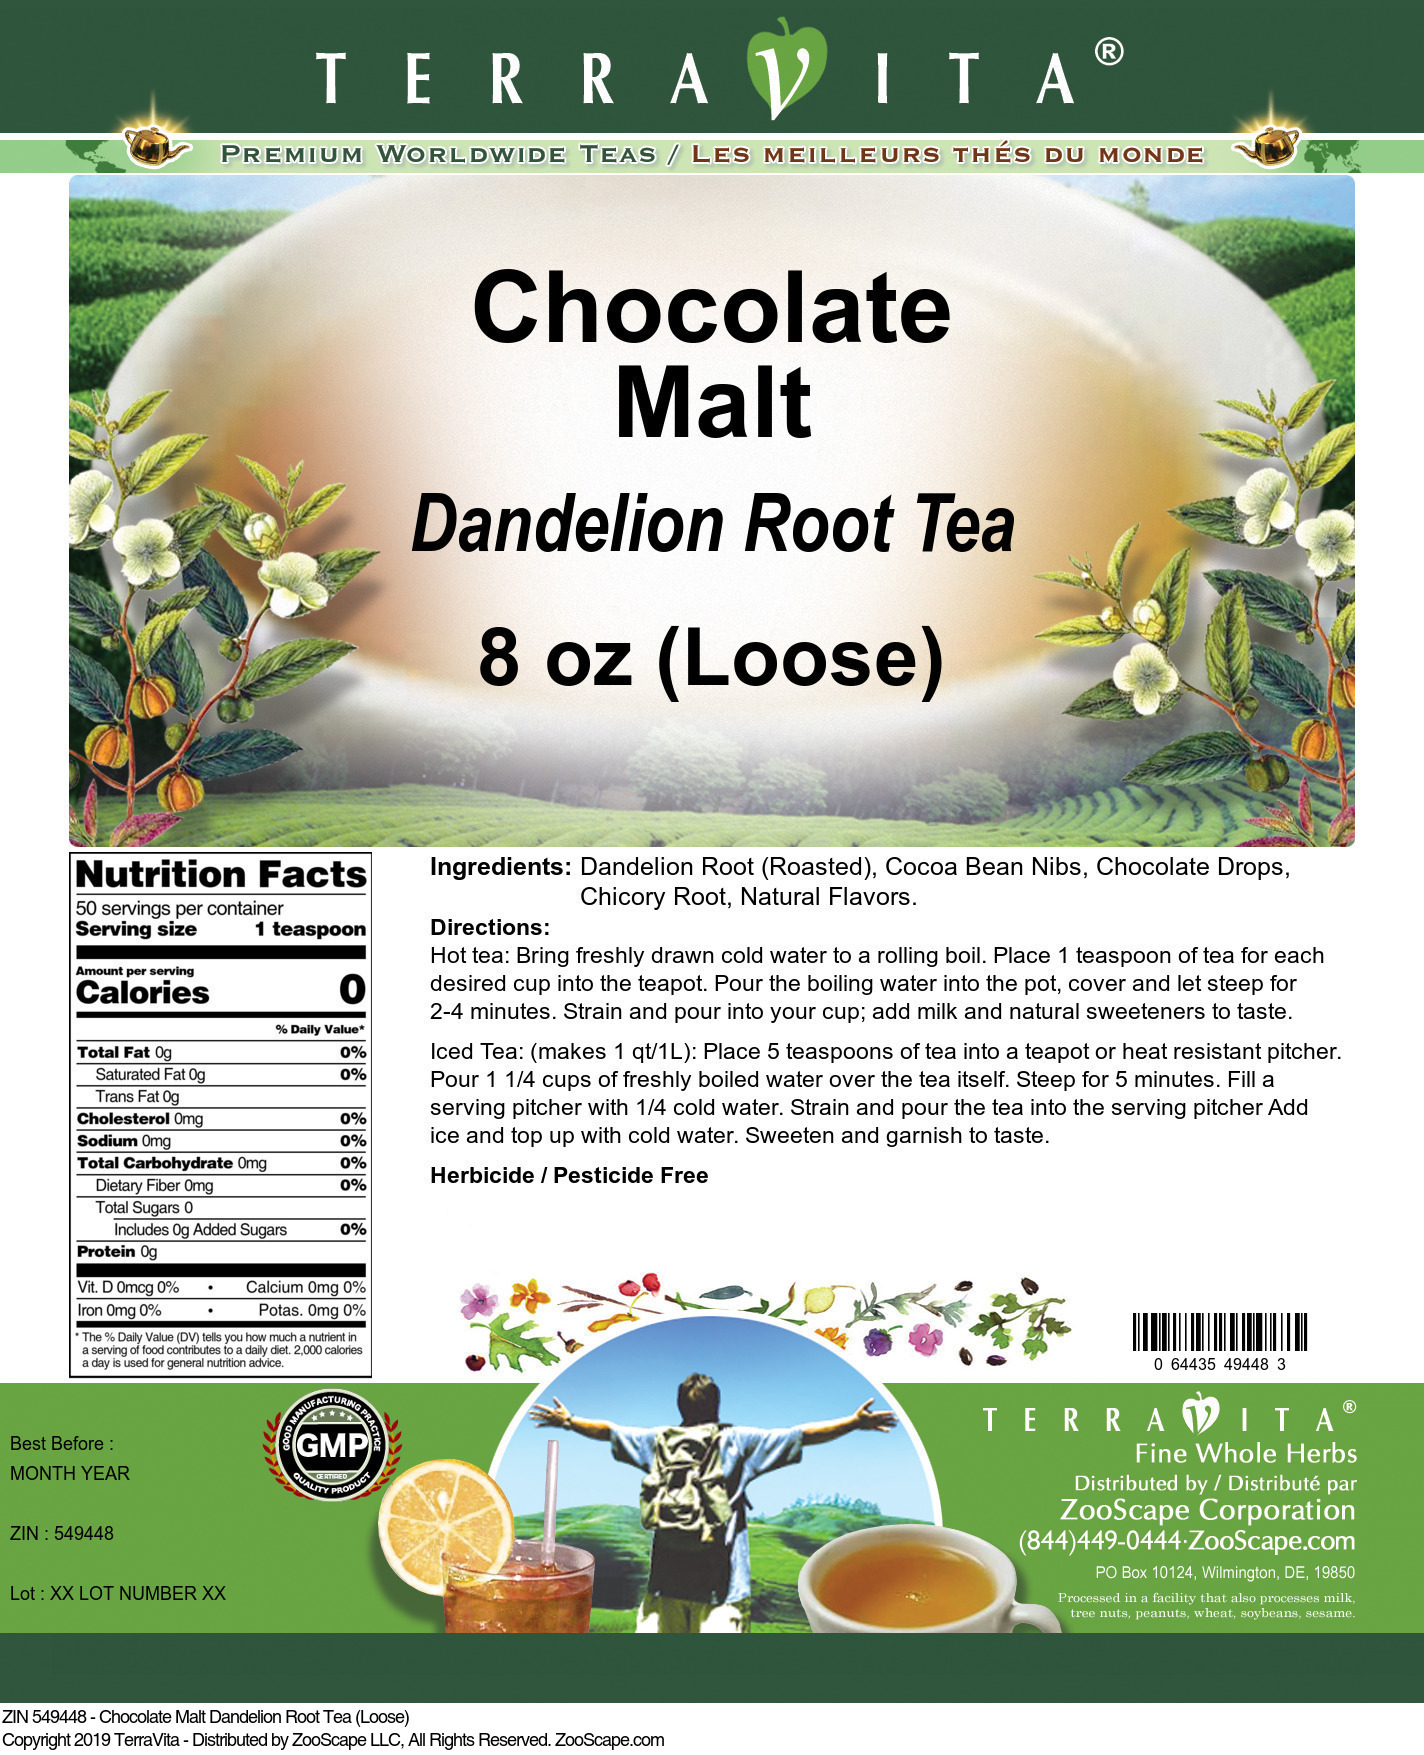 Chocolate Malt Dandelion Root Tea (Loose) - Label